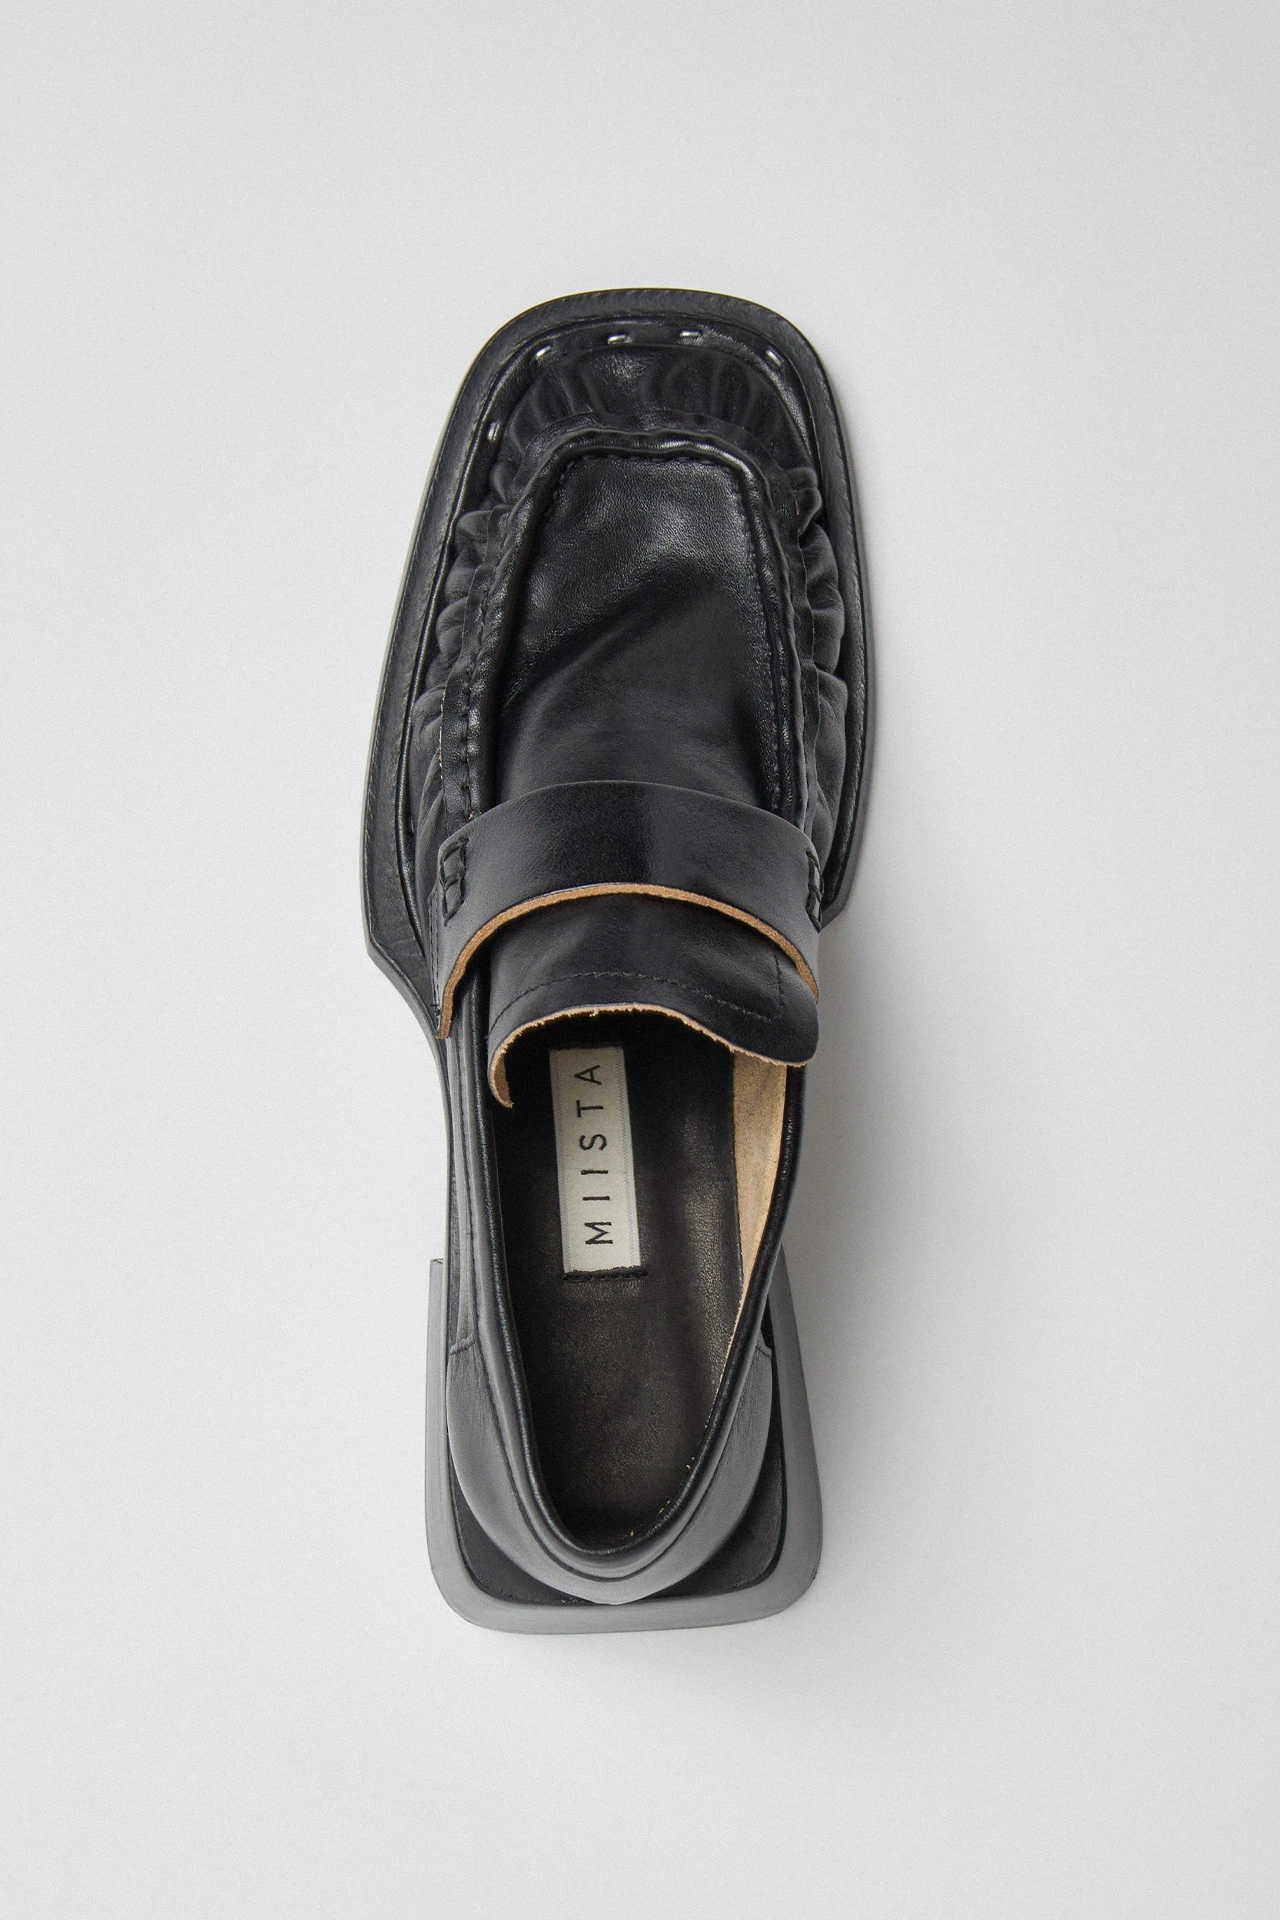 Miista-airi-black-loafers-03